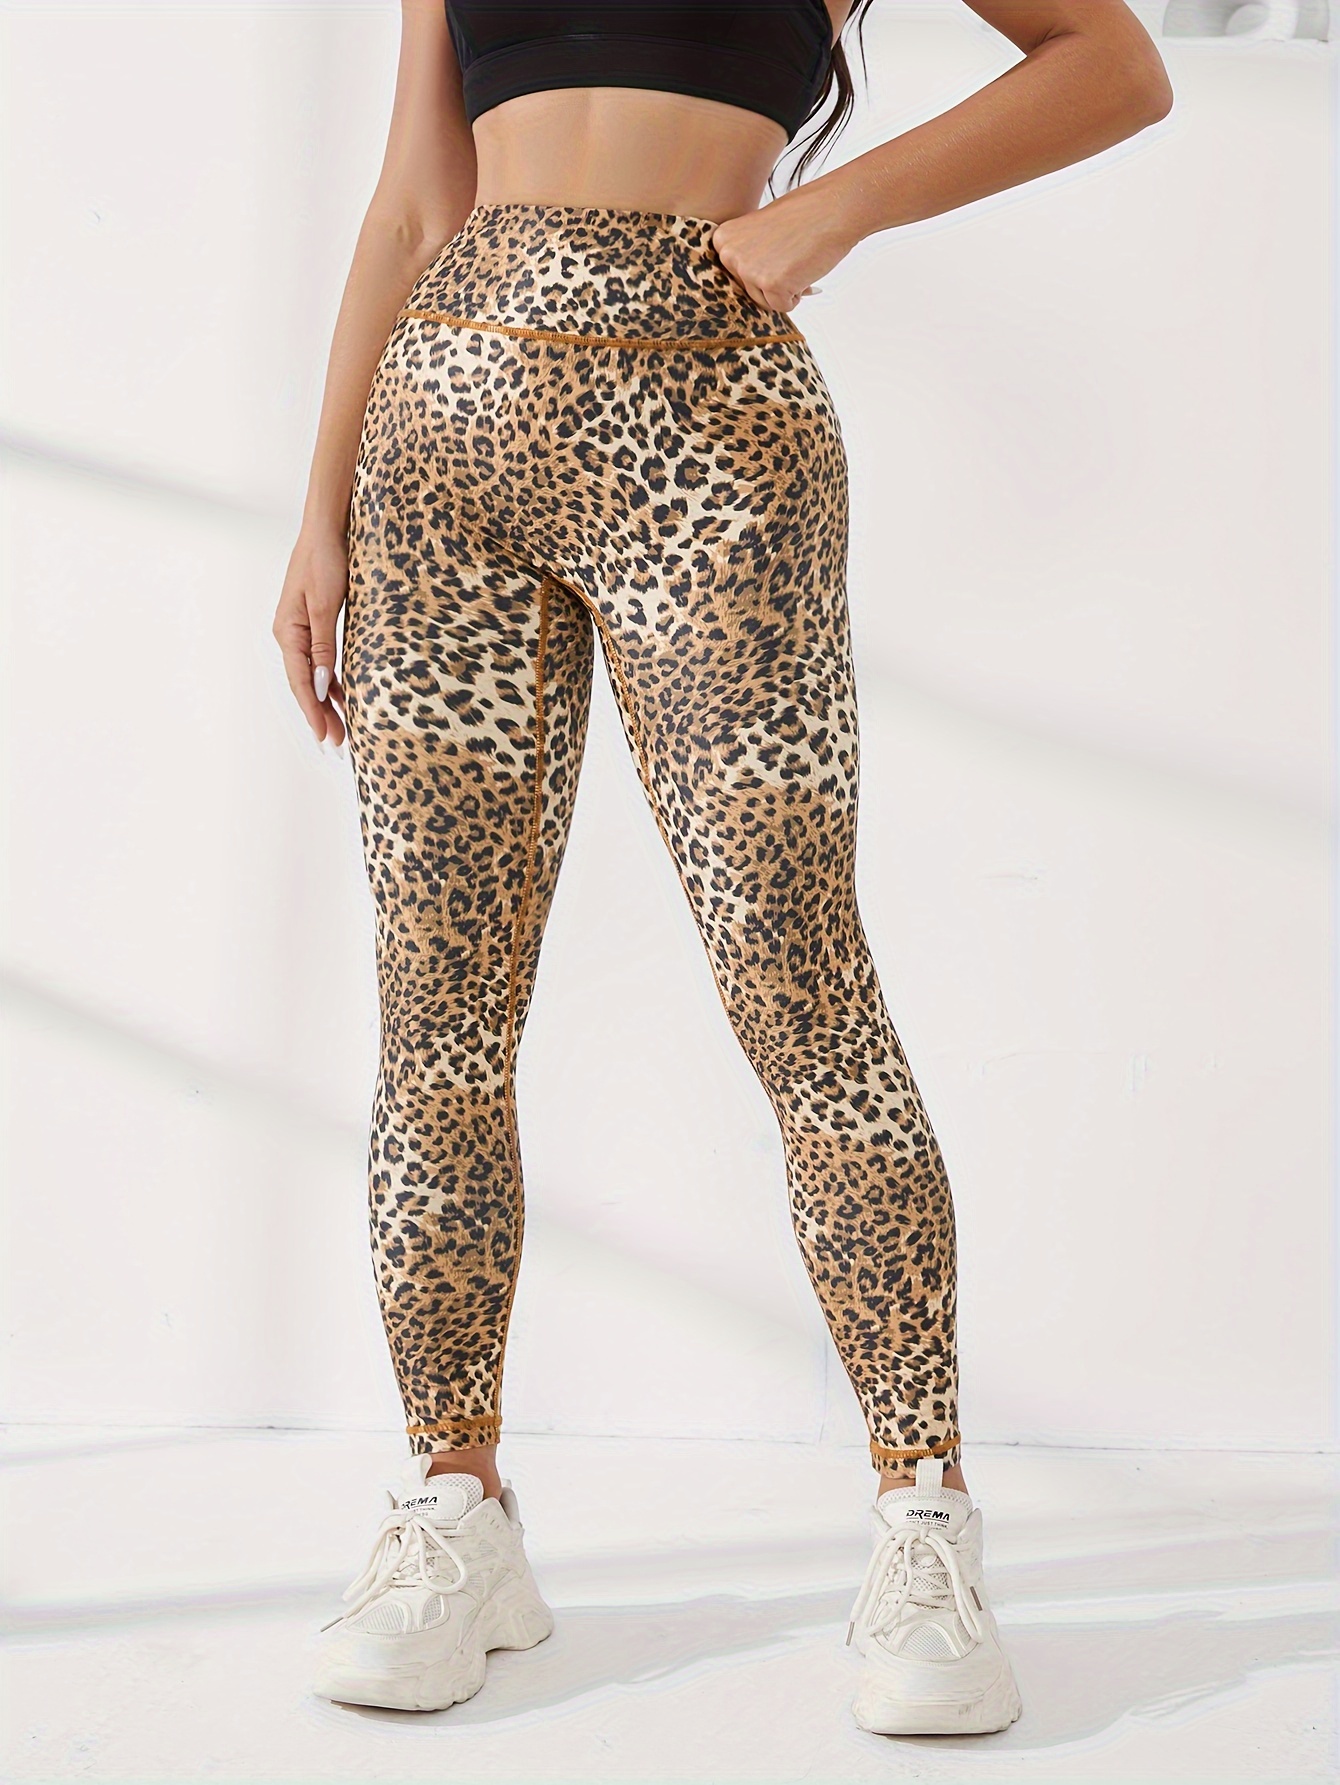 Leopard Print Design Yoga Leggings -  Canada